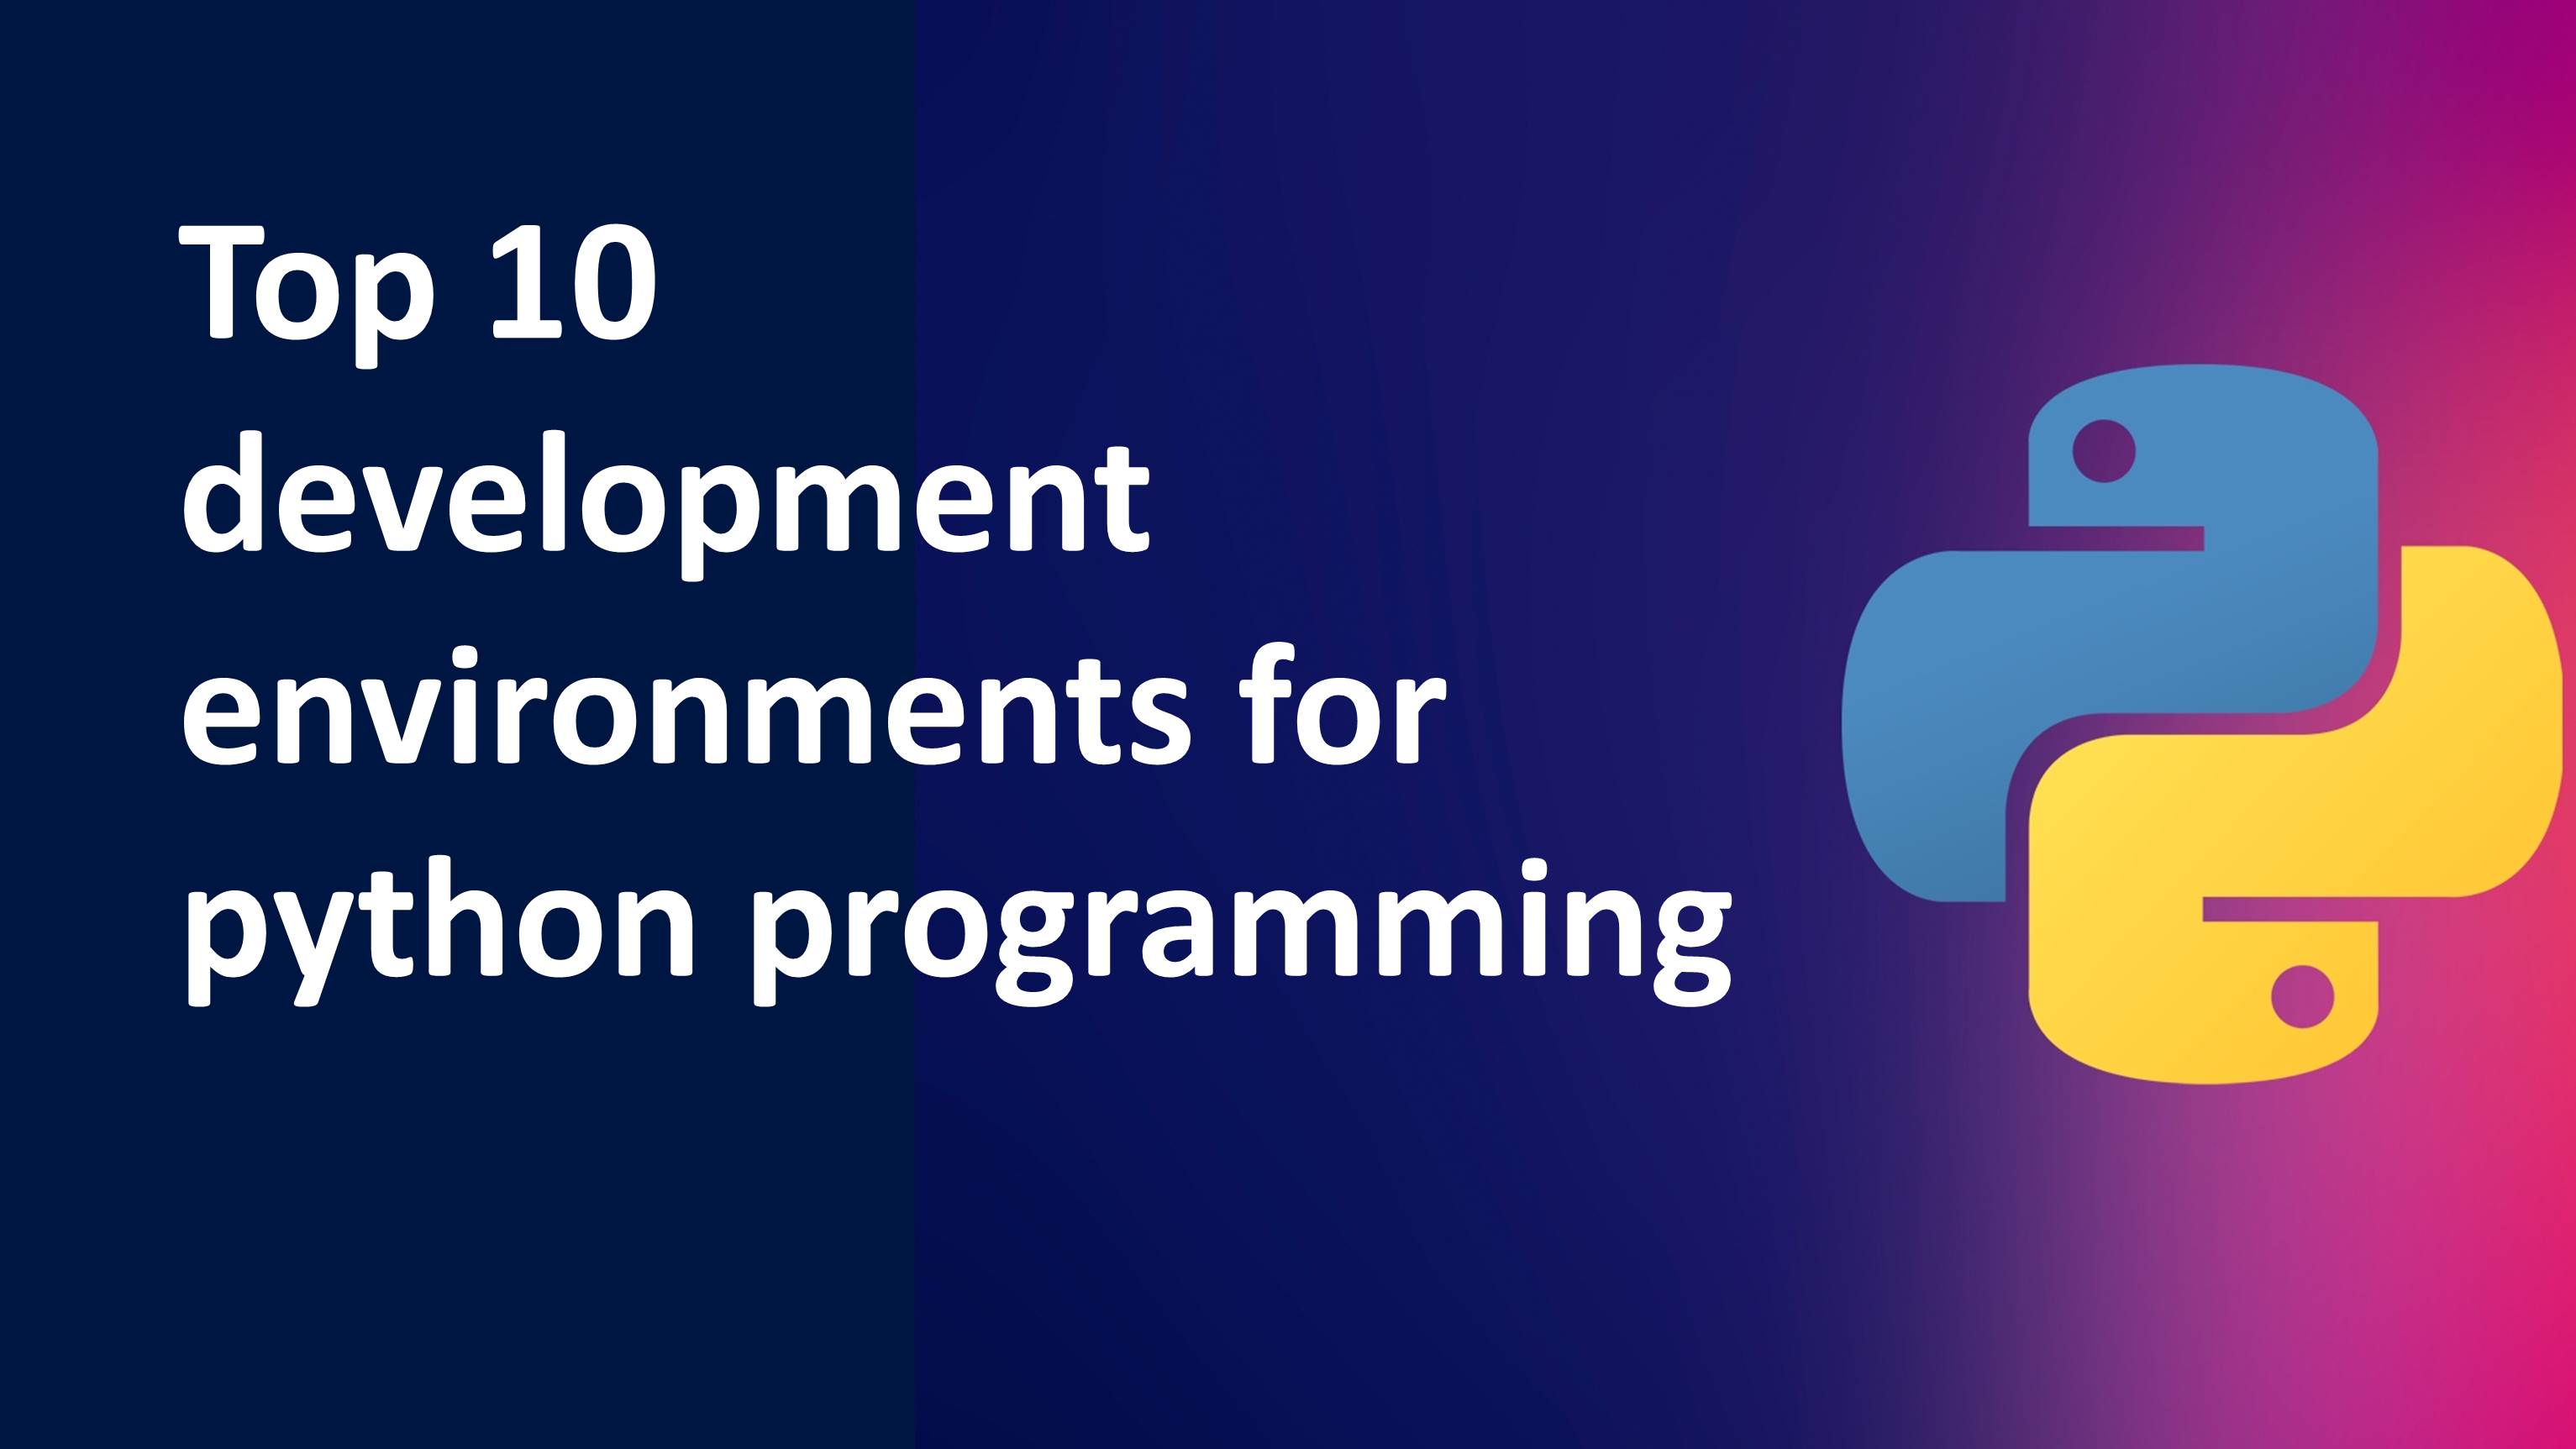 Top 10 development environments for python programming